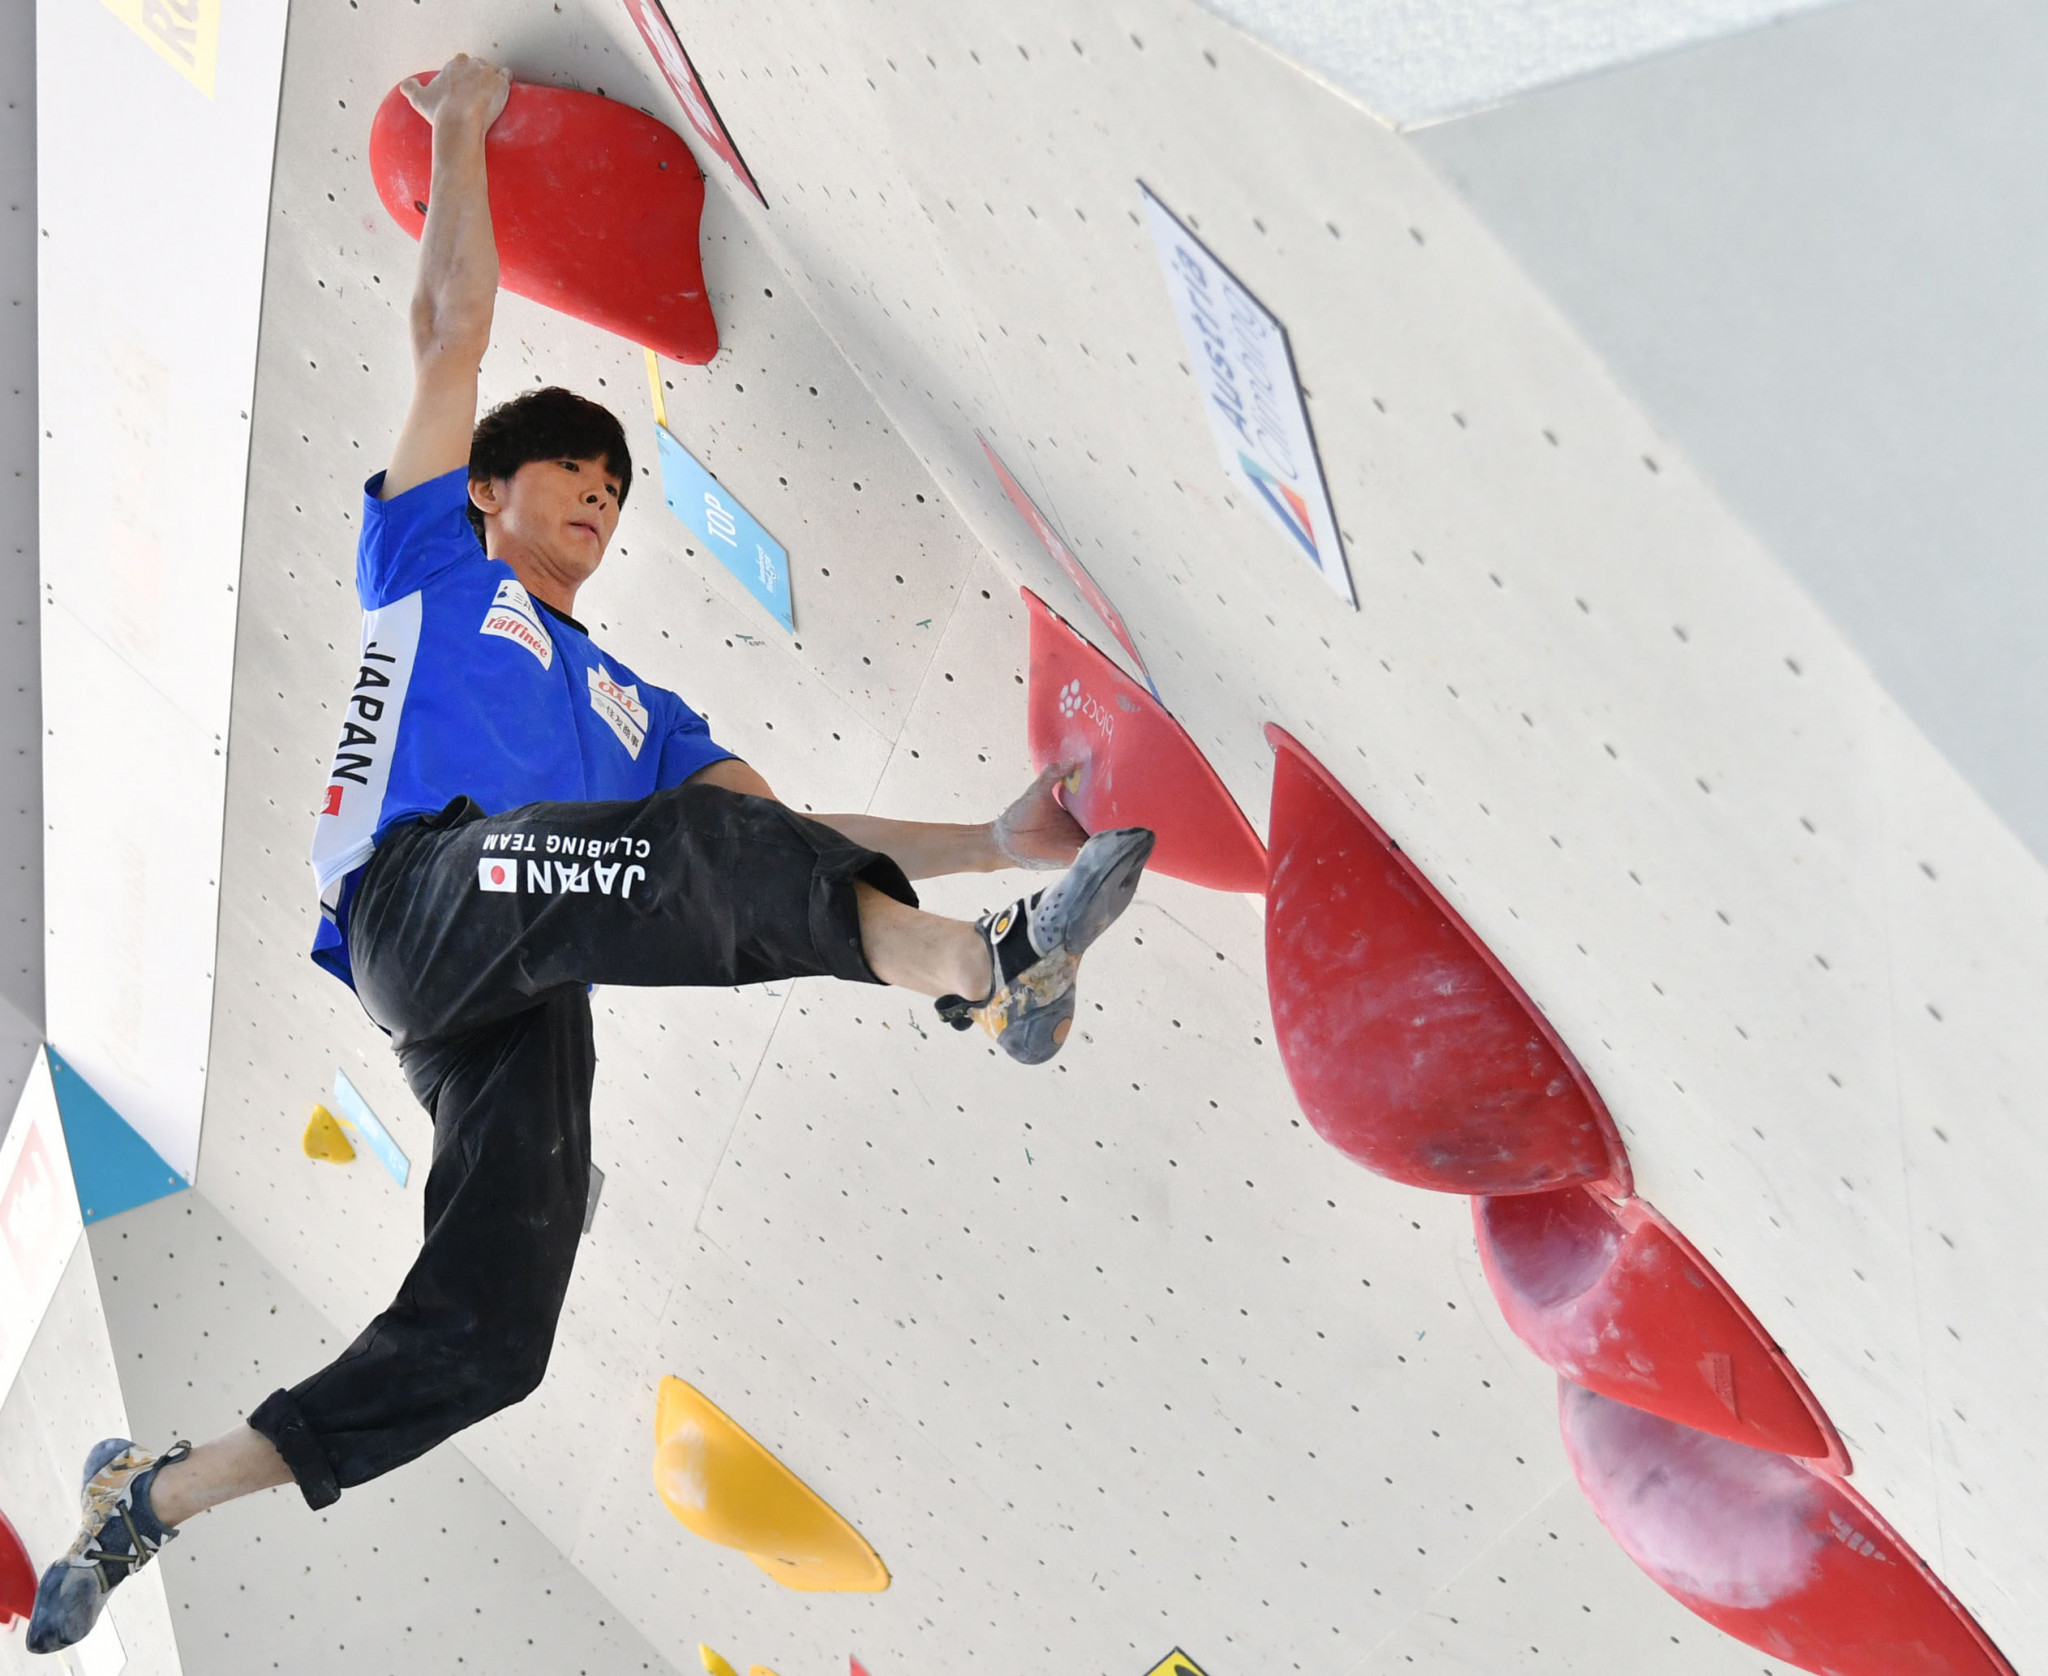 Narasaki overhauls Ondra to clinch IFSC Bouldering World Cup